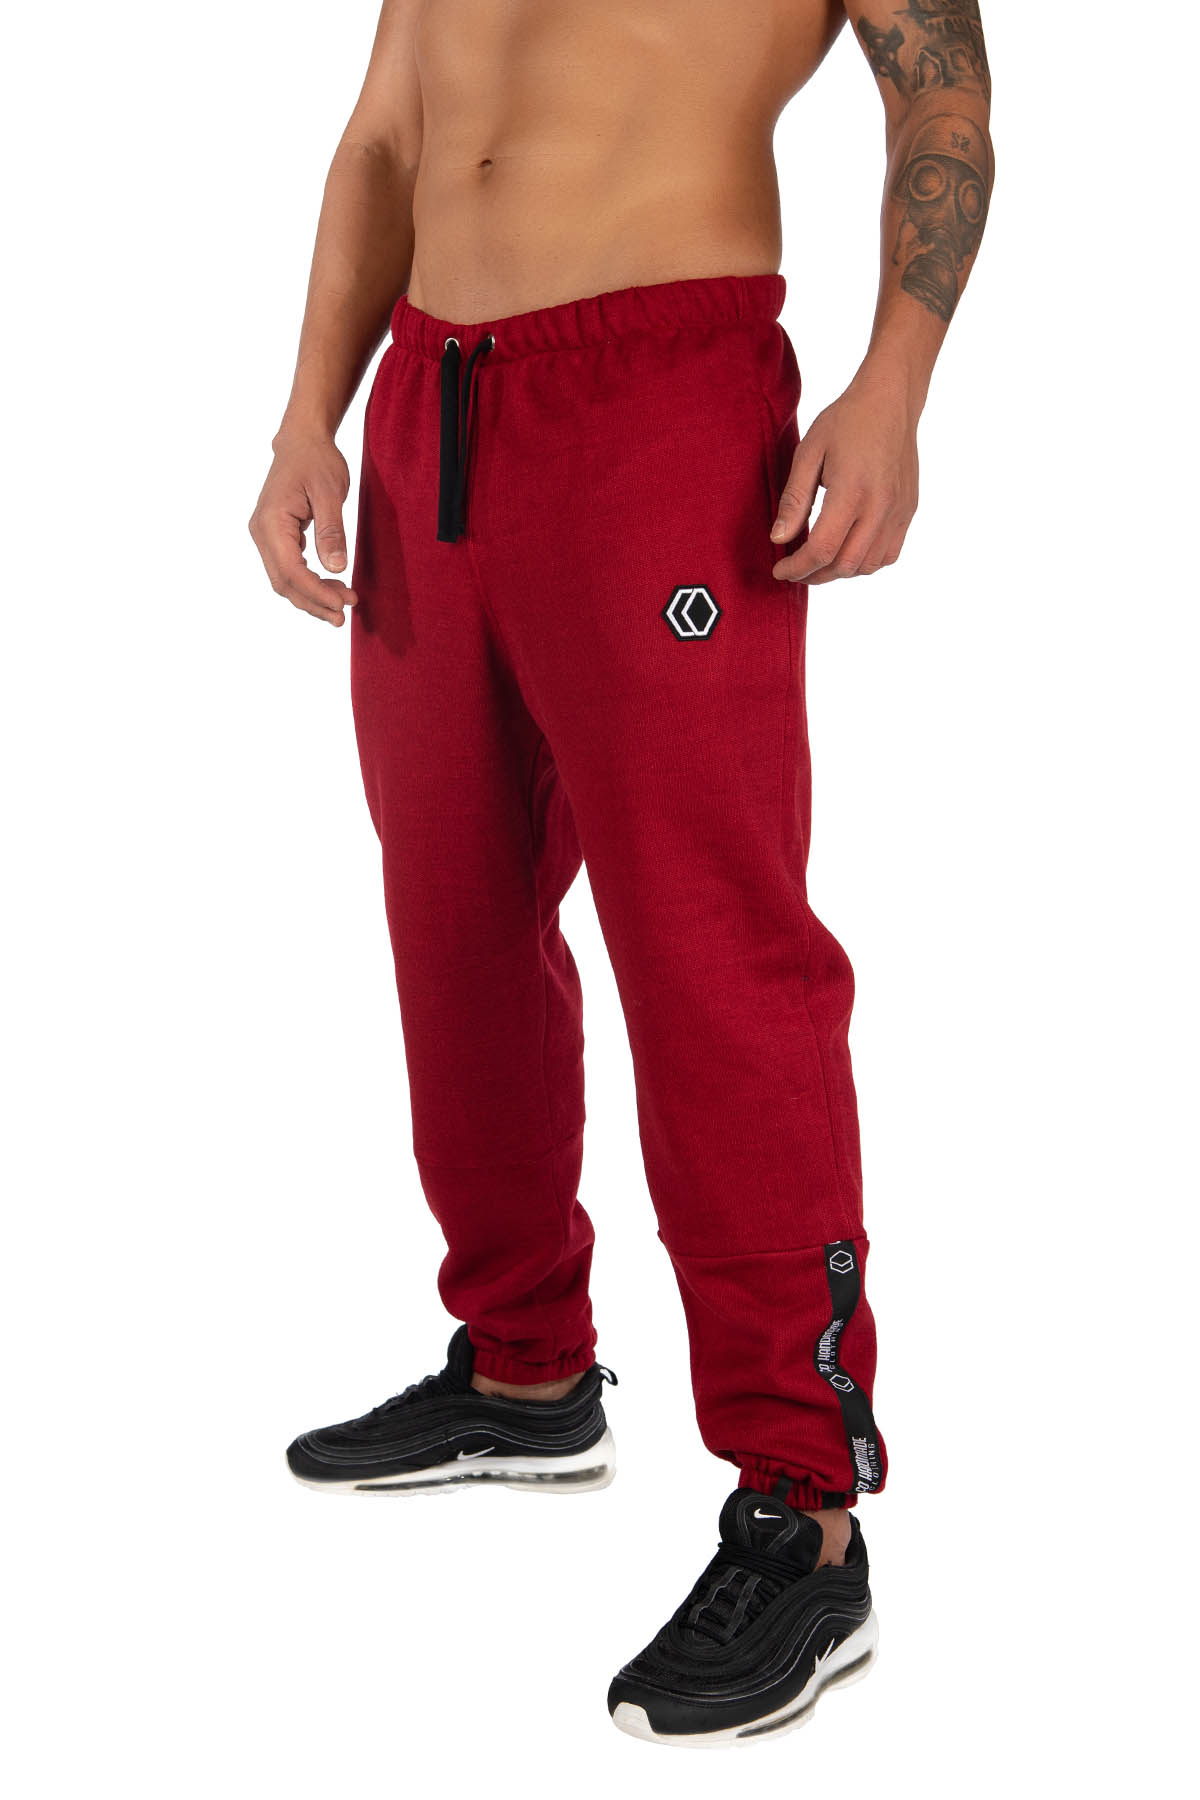 Pants Red Jam